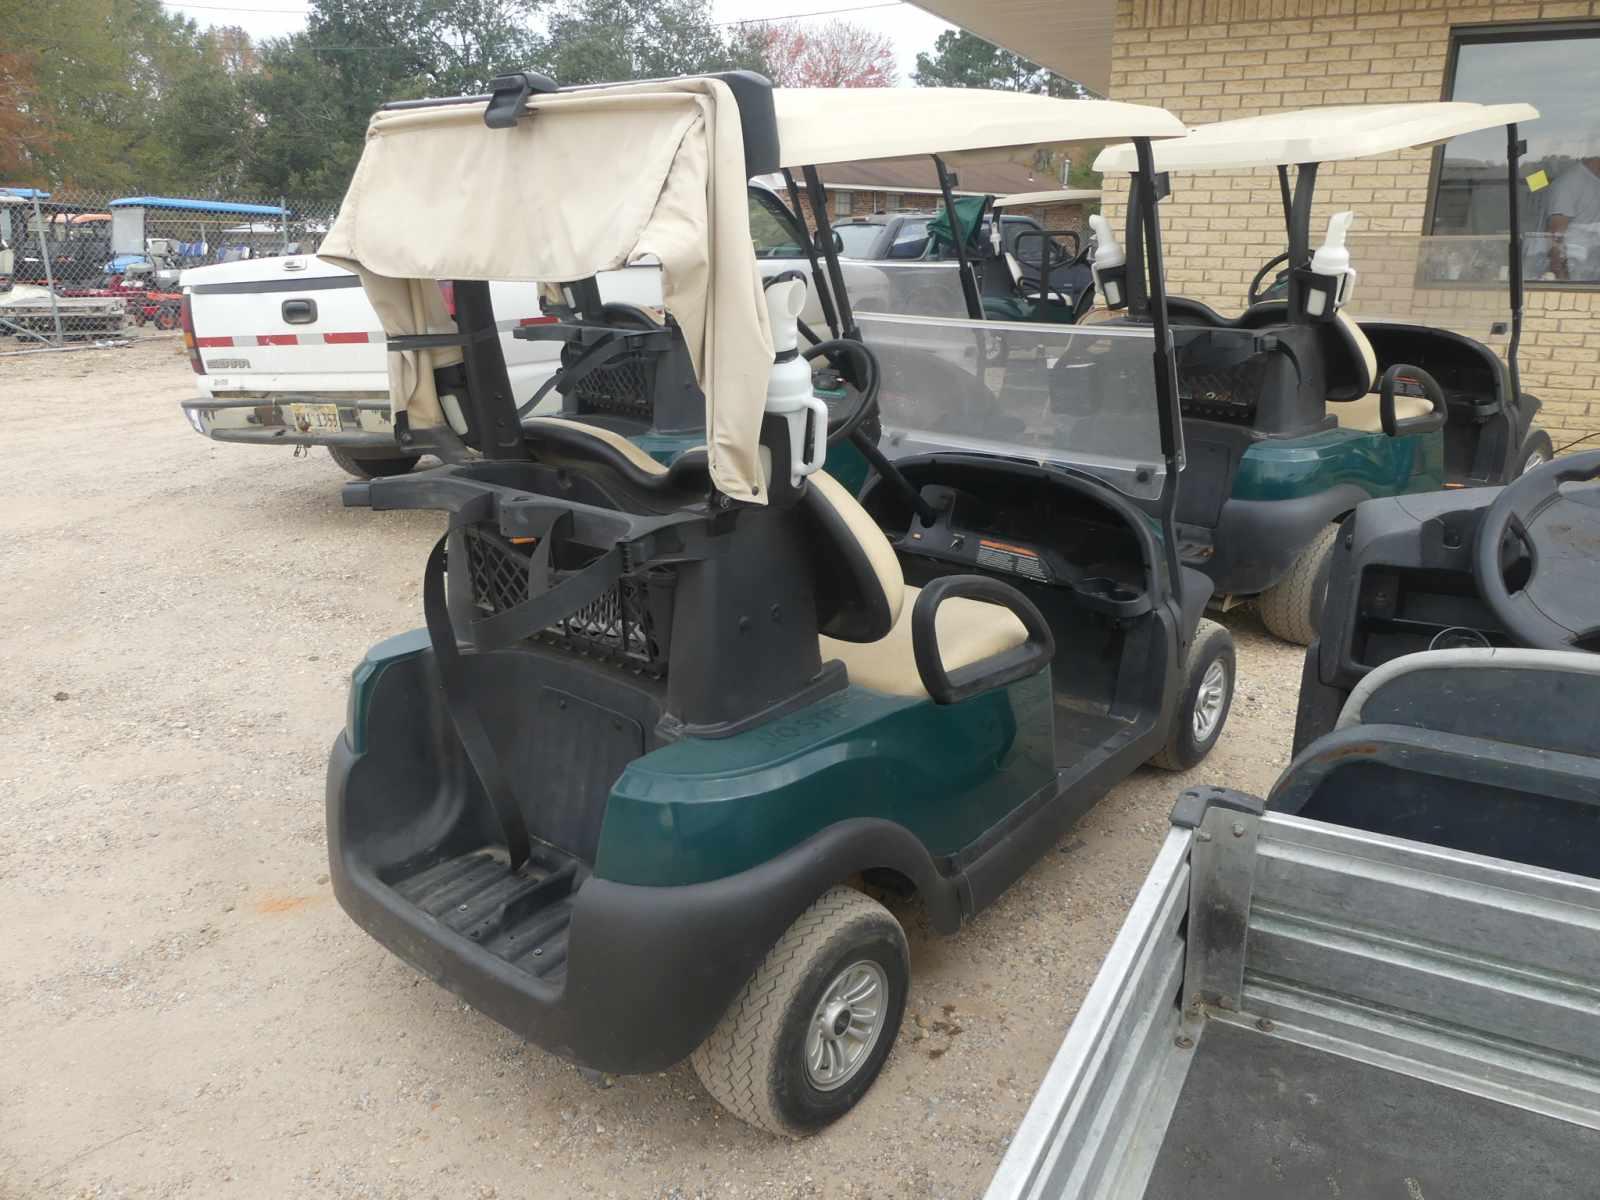 2019 Club Car Precednt Electric Golf Cart, s/n JE1945-024535 (No Title): w/